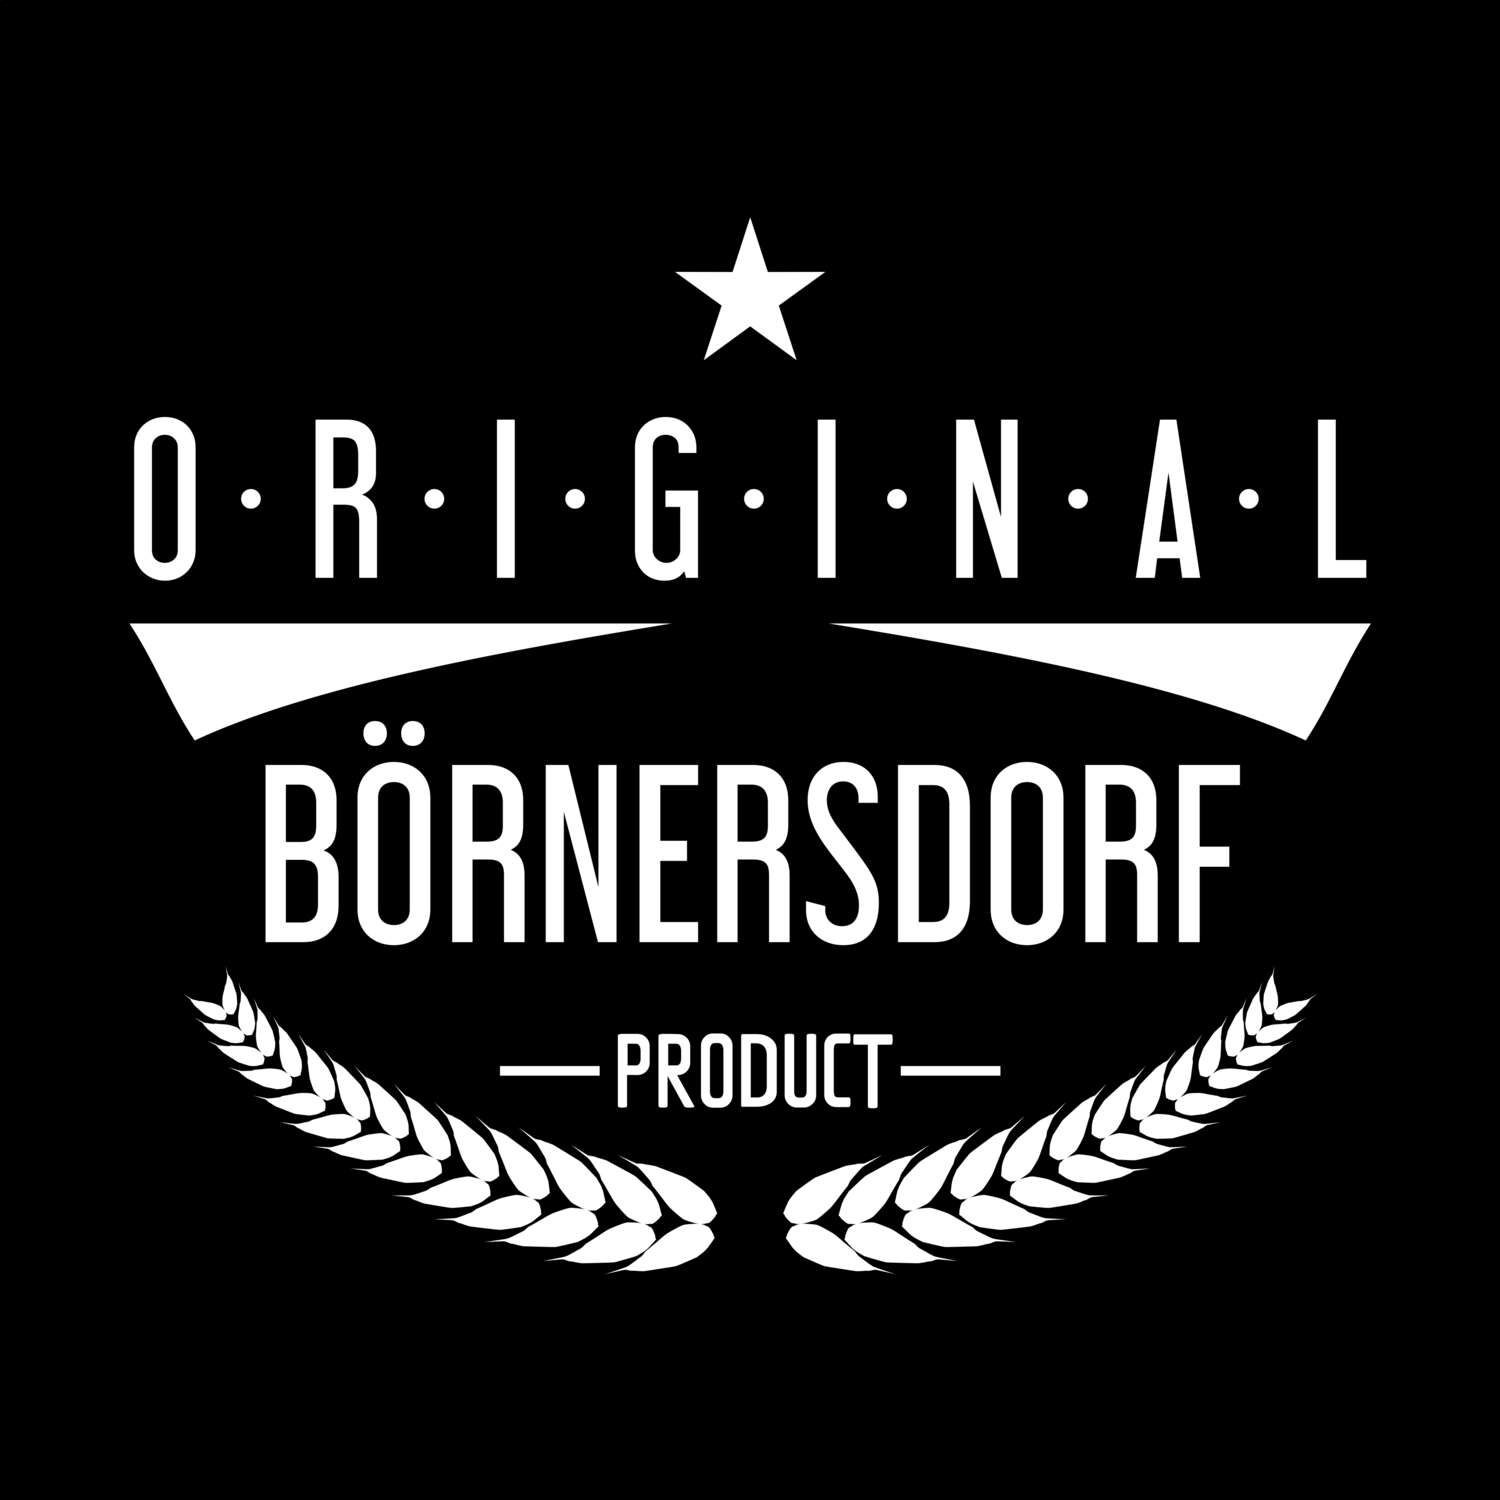 Börnersdorf T-Shirt »Original Product«